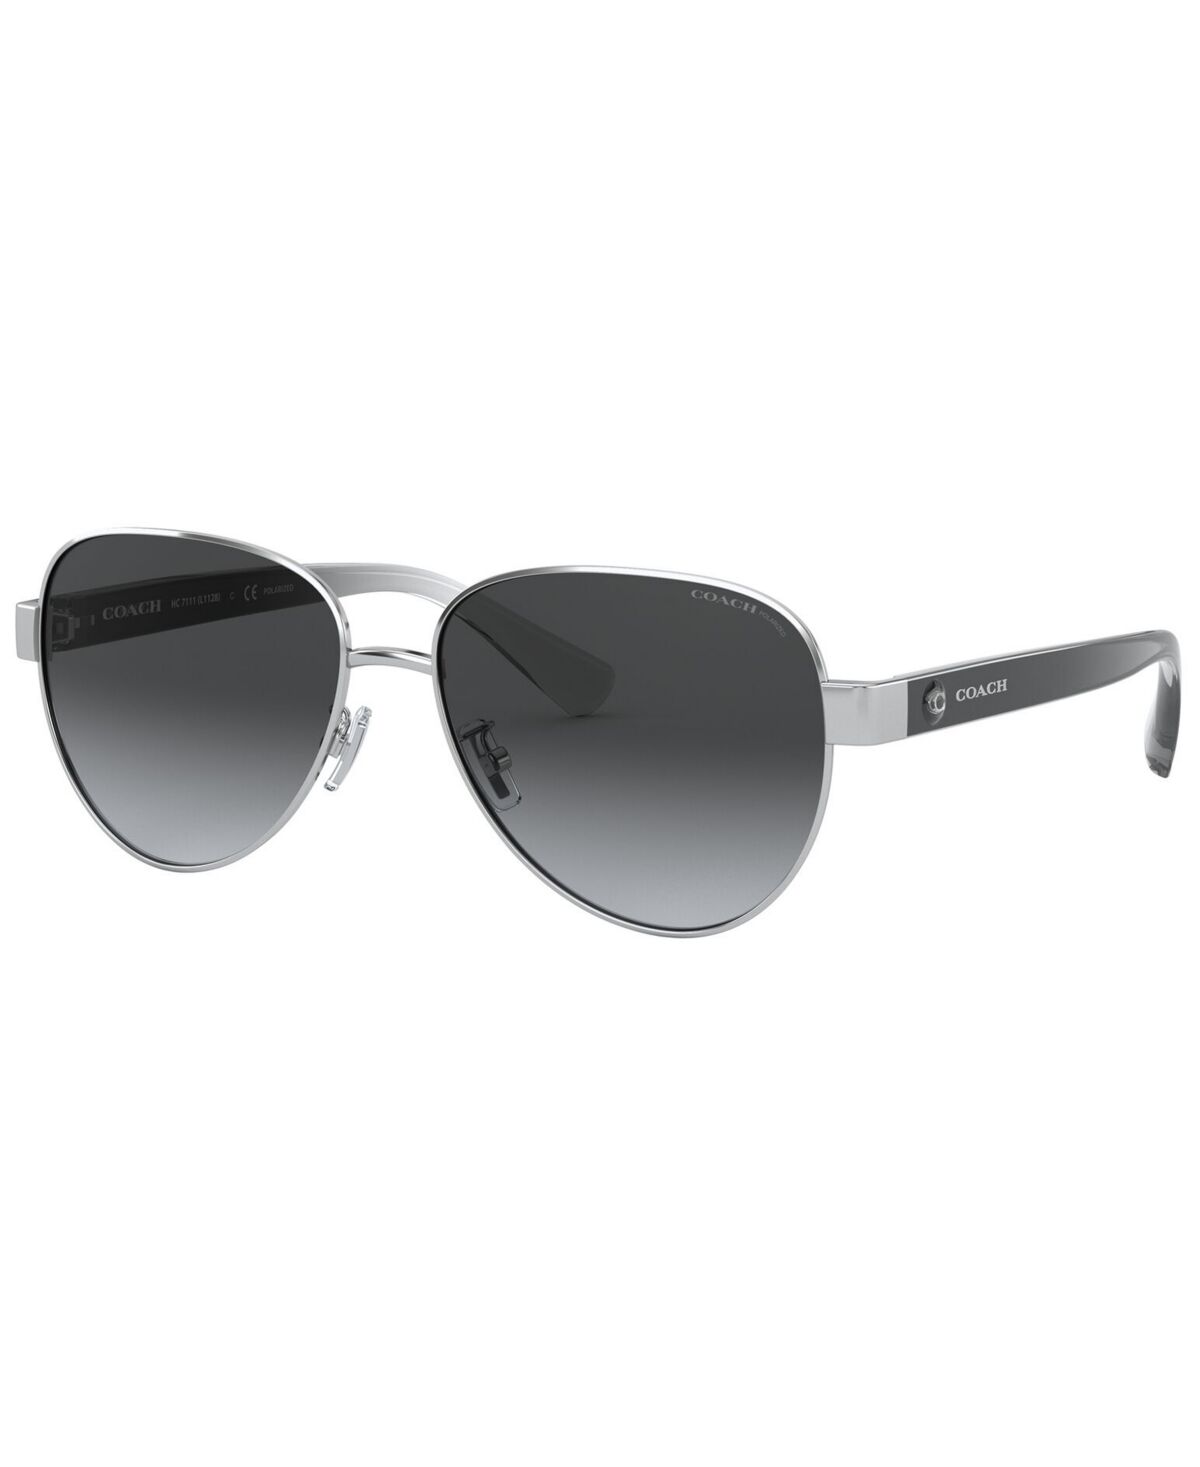 Coach Women's Polarized Sunglasses, HC7111 - Shiny Silver/Dark Gray Gradient POLAR